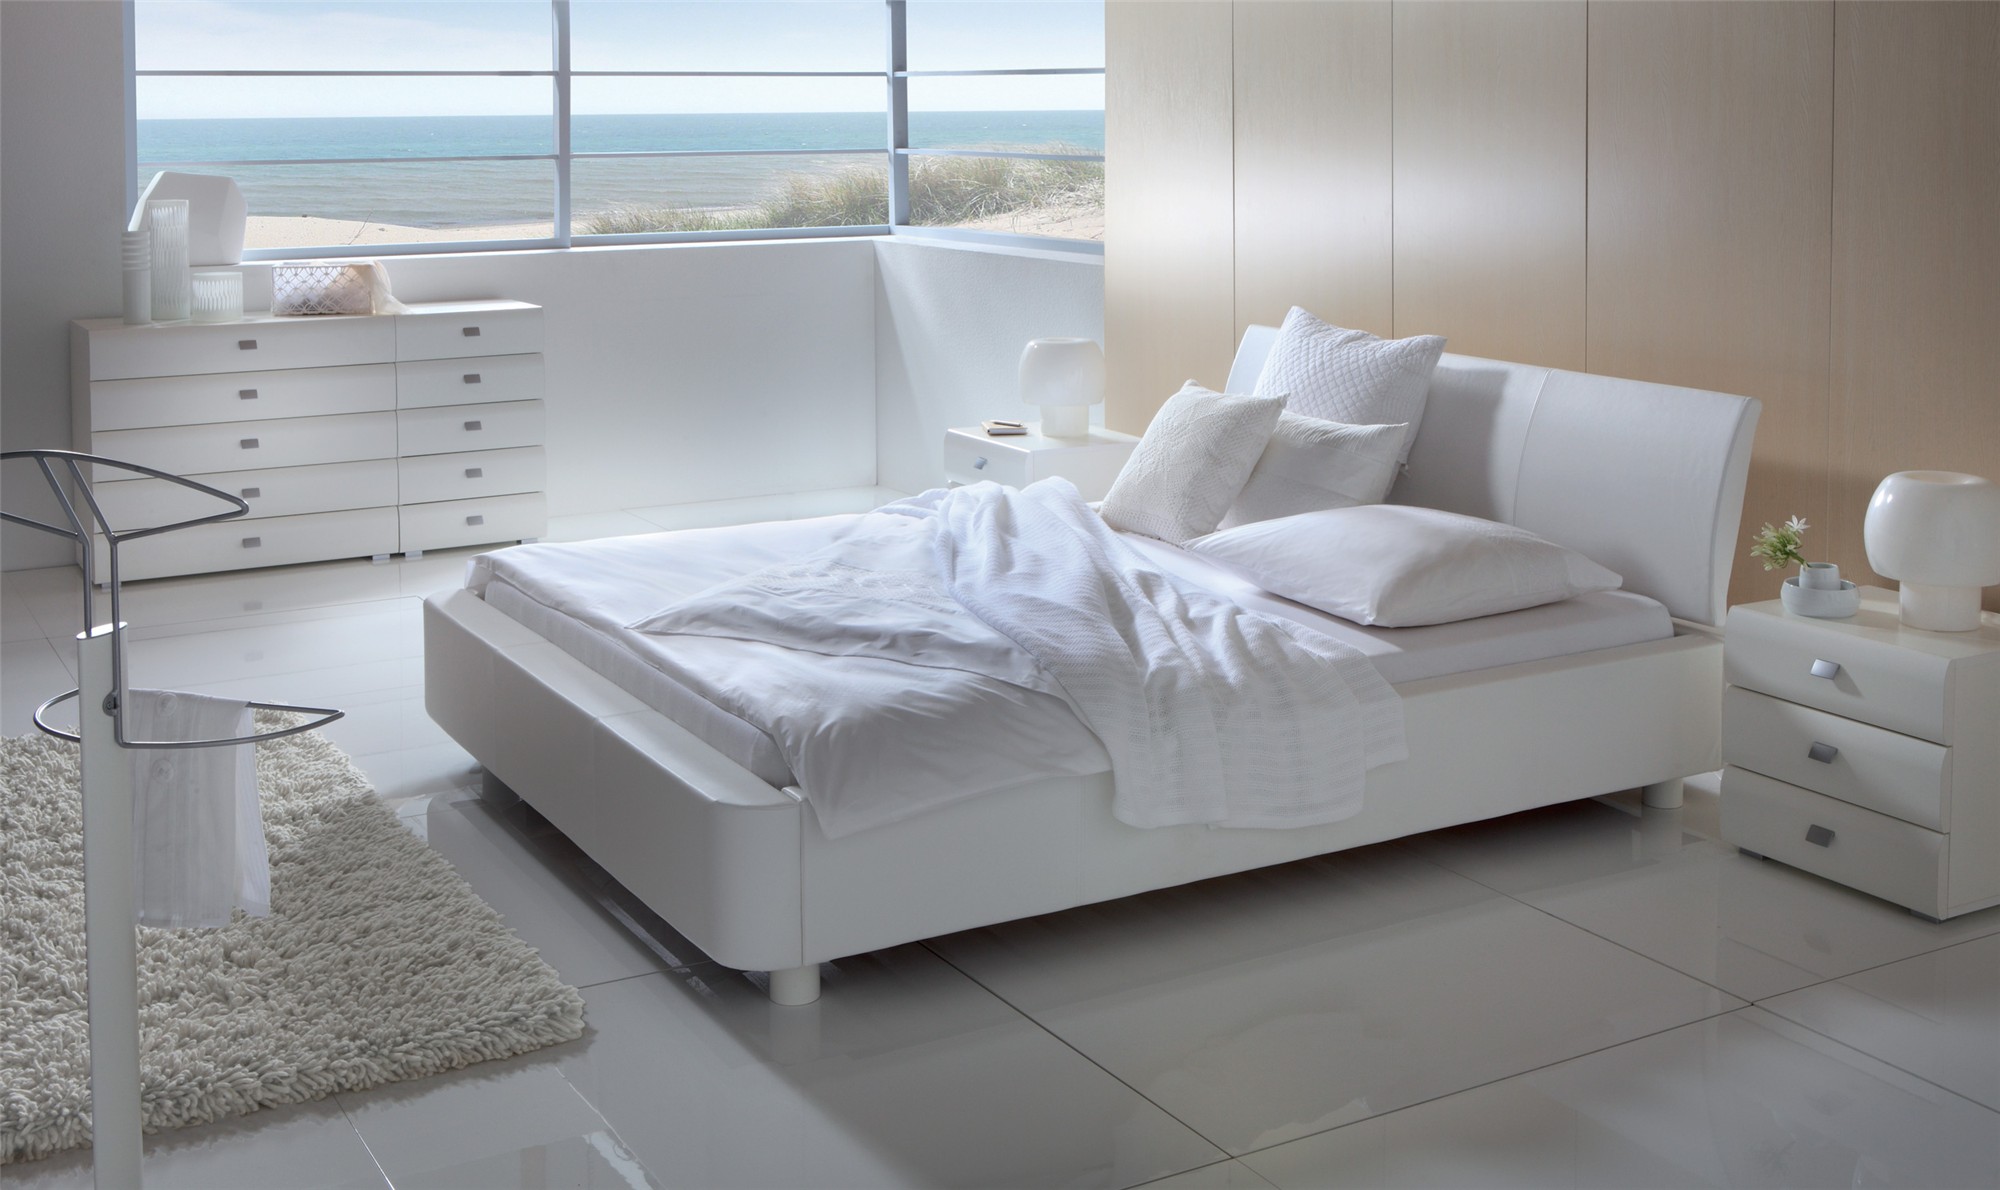 Pure white designer bed in a minimalist bedroom